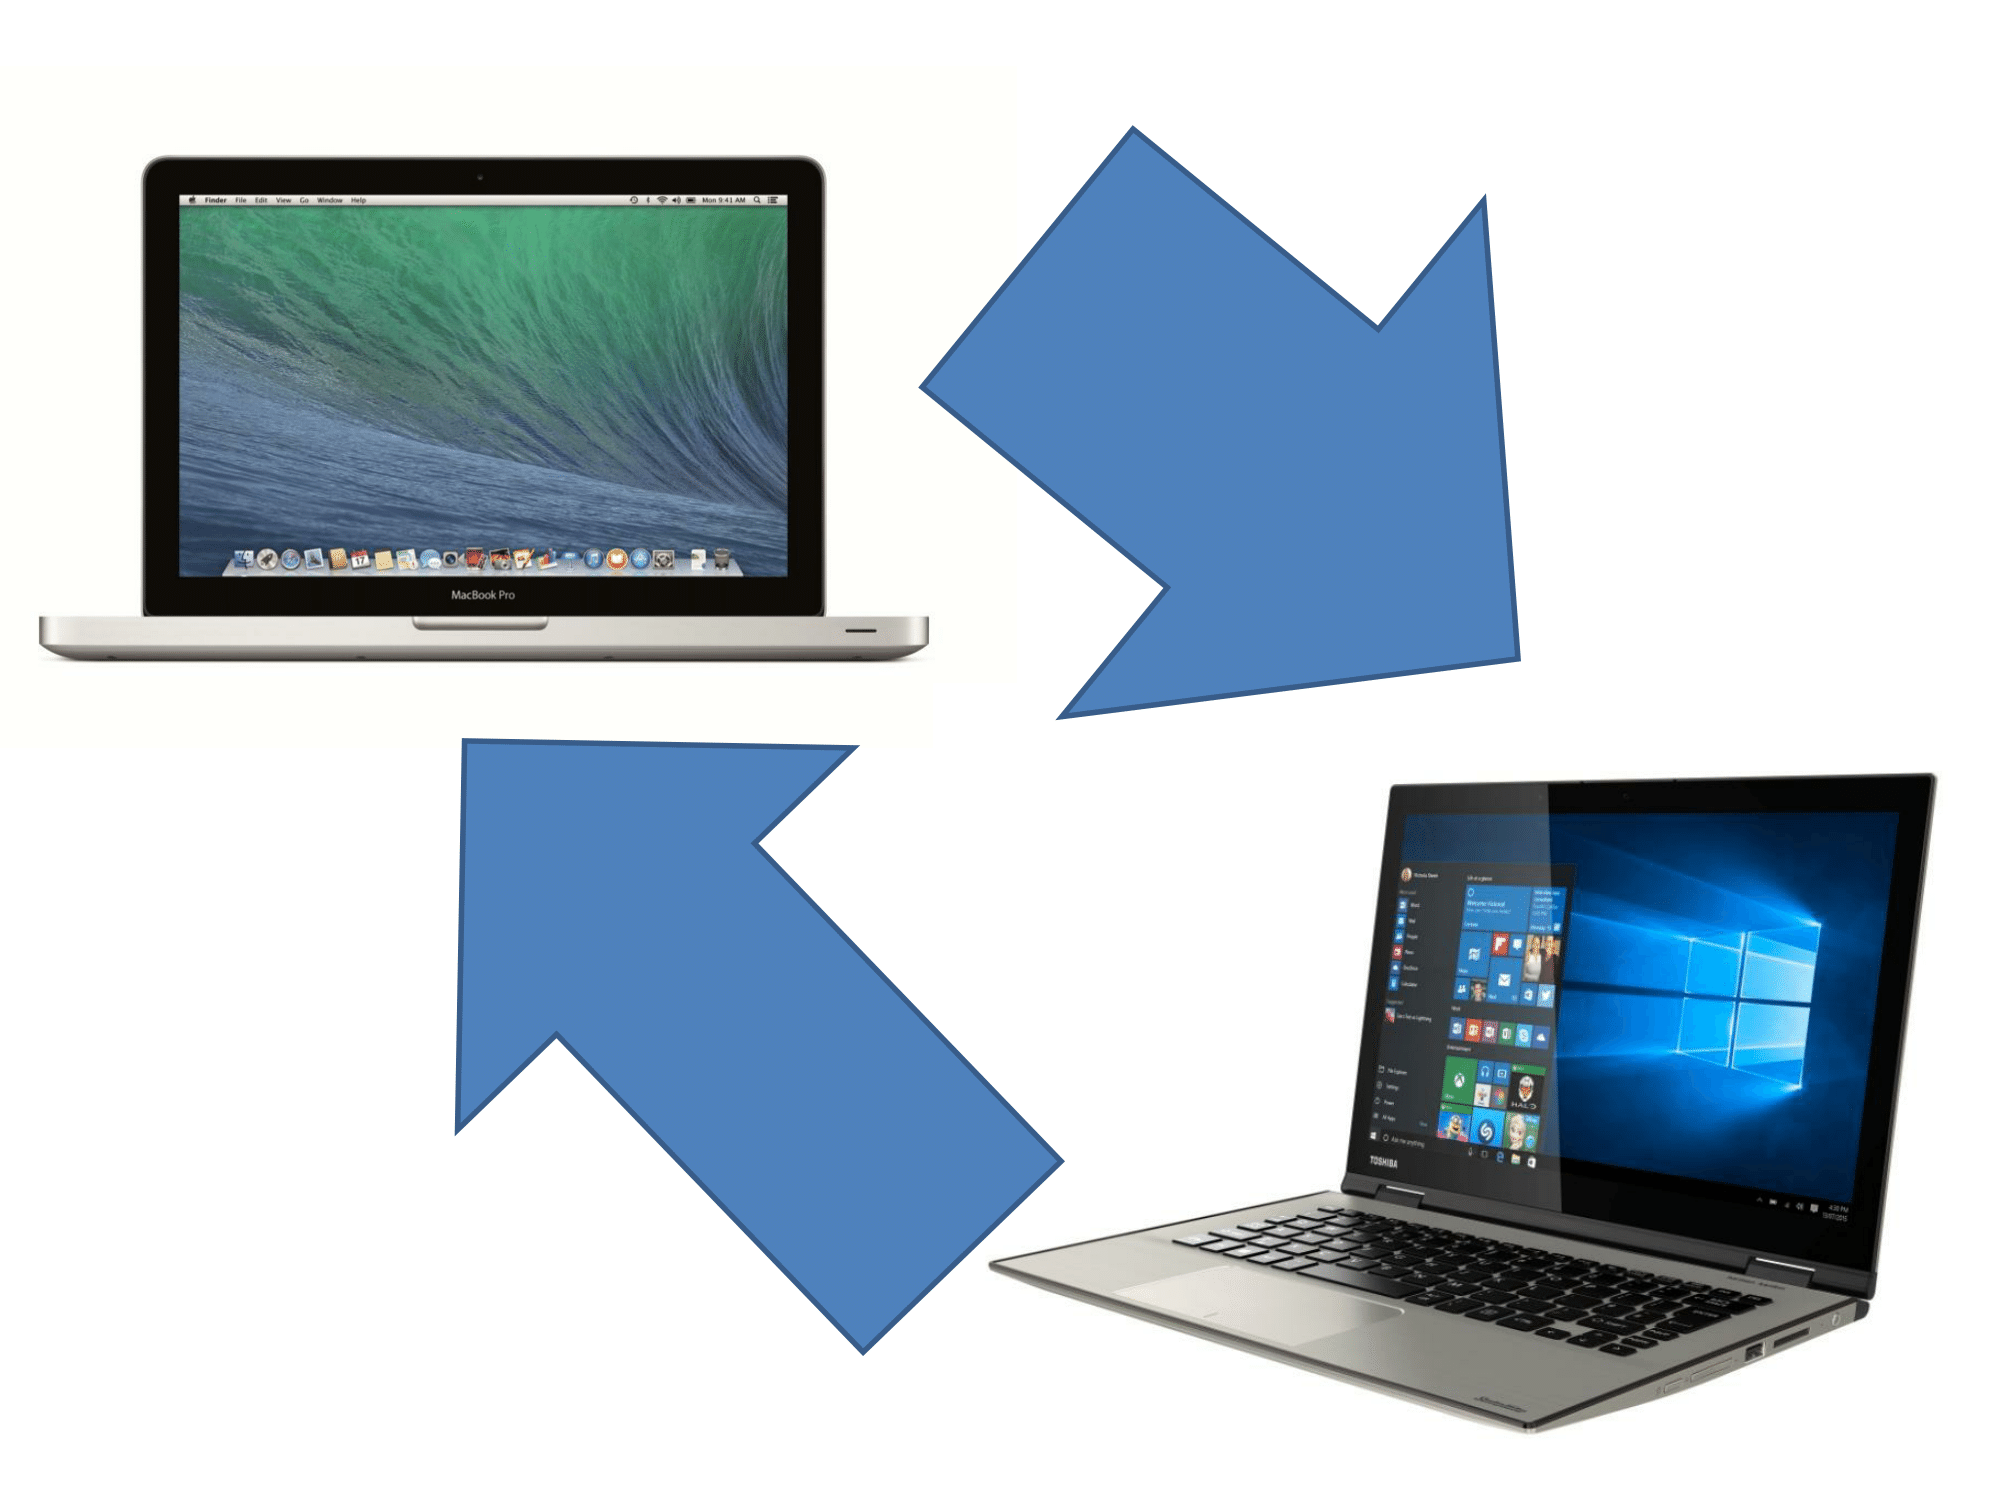 Moving between Macintosh and Windows